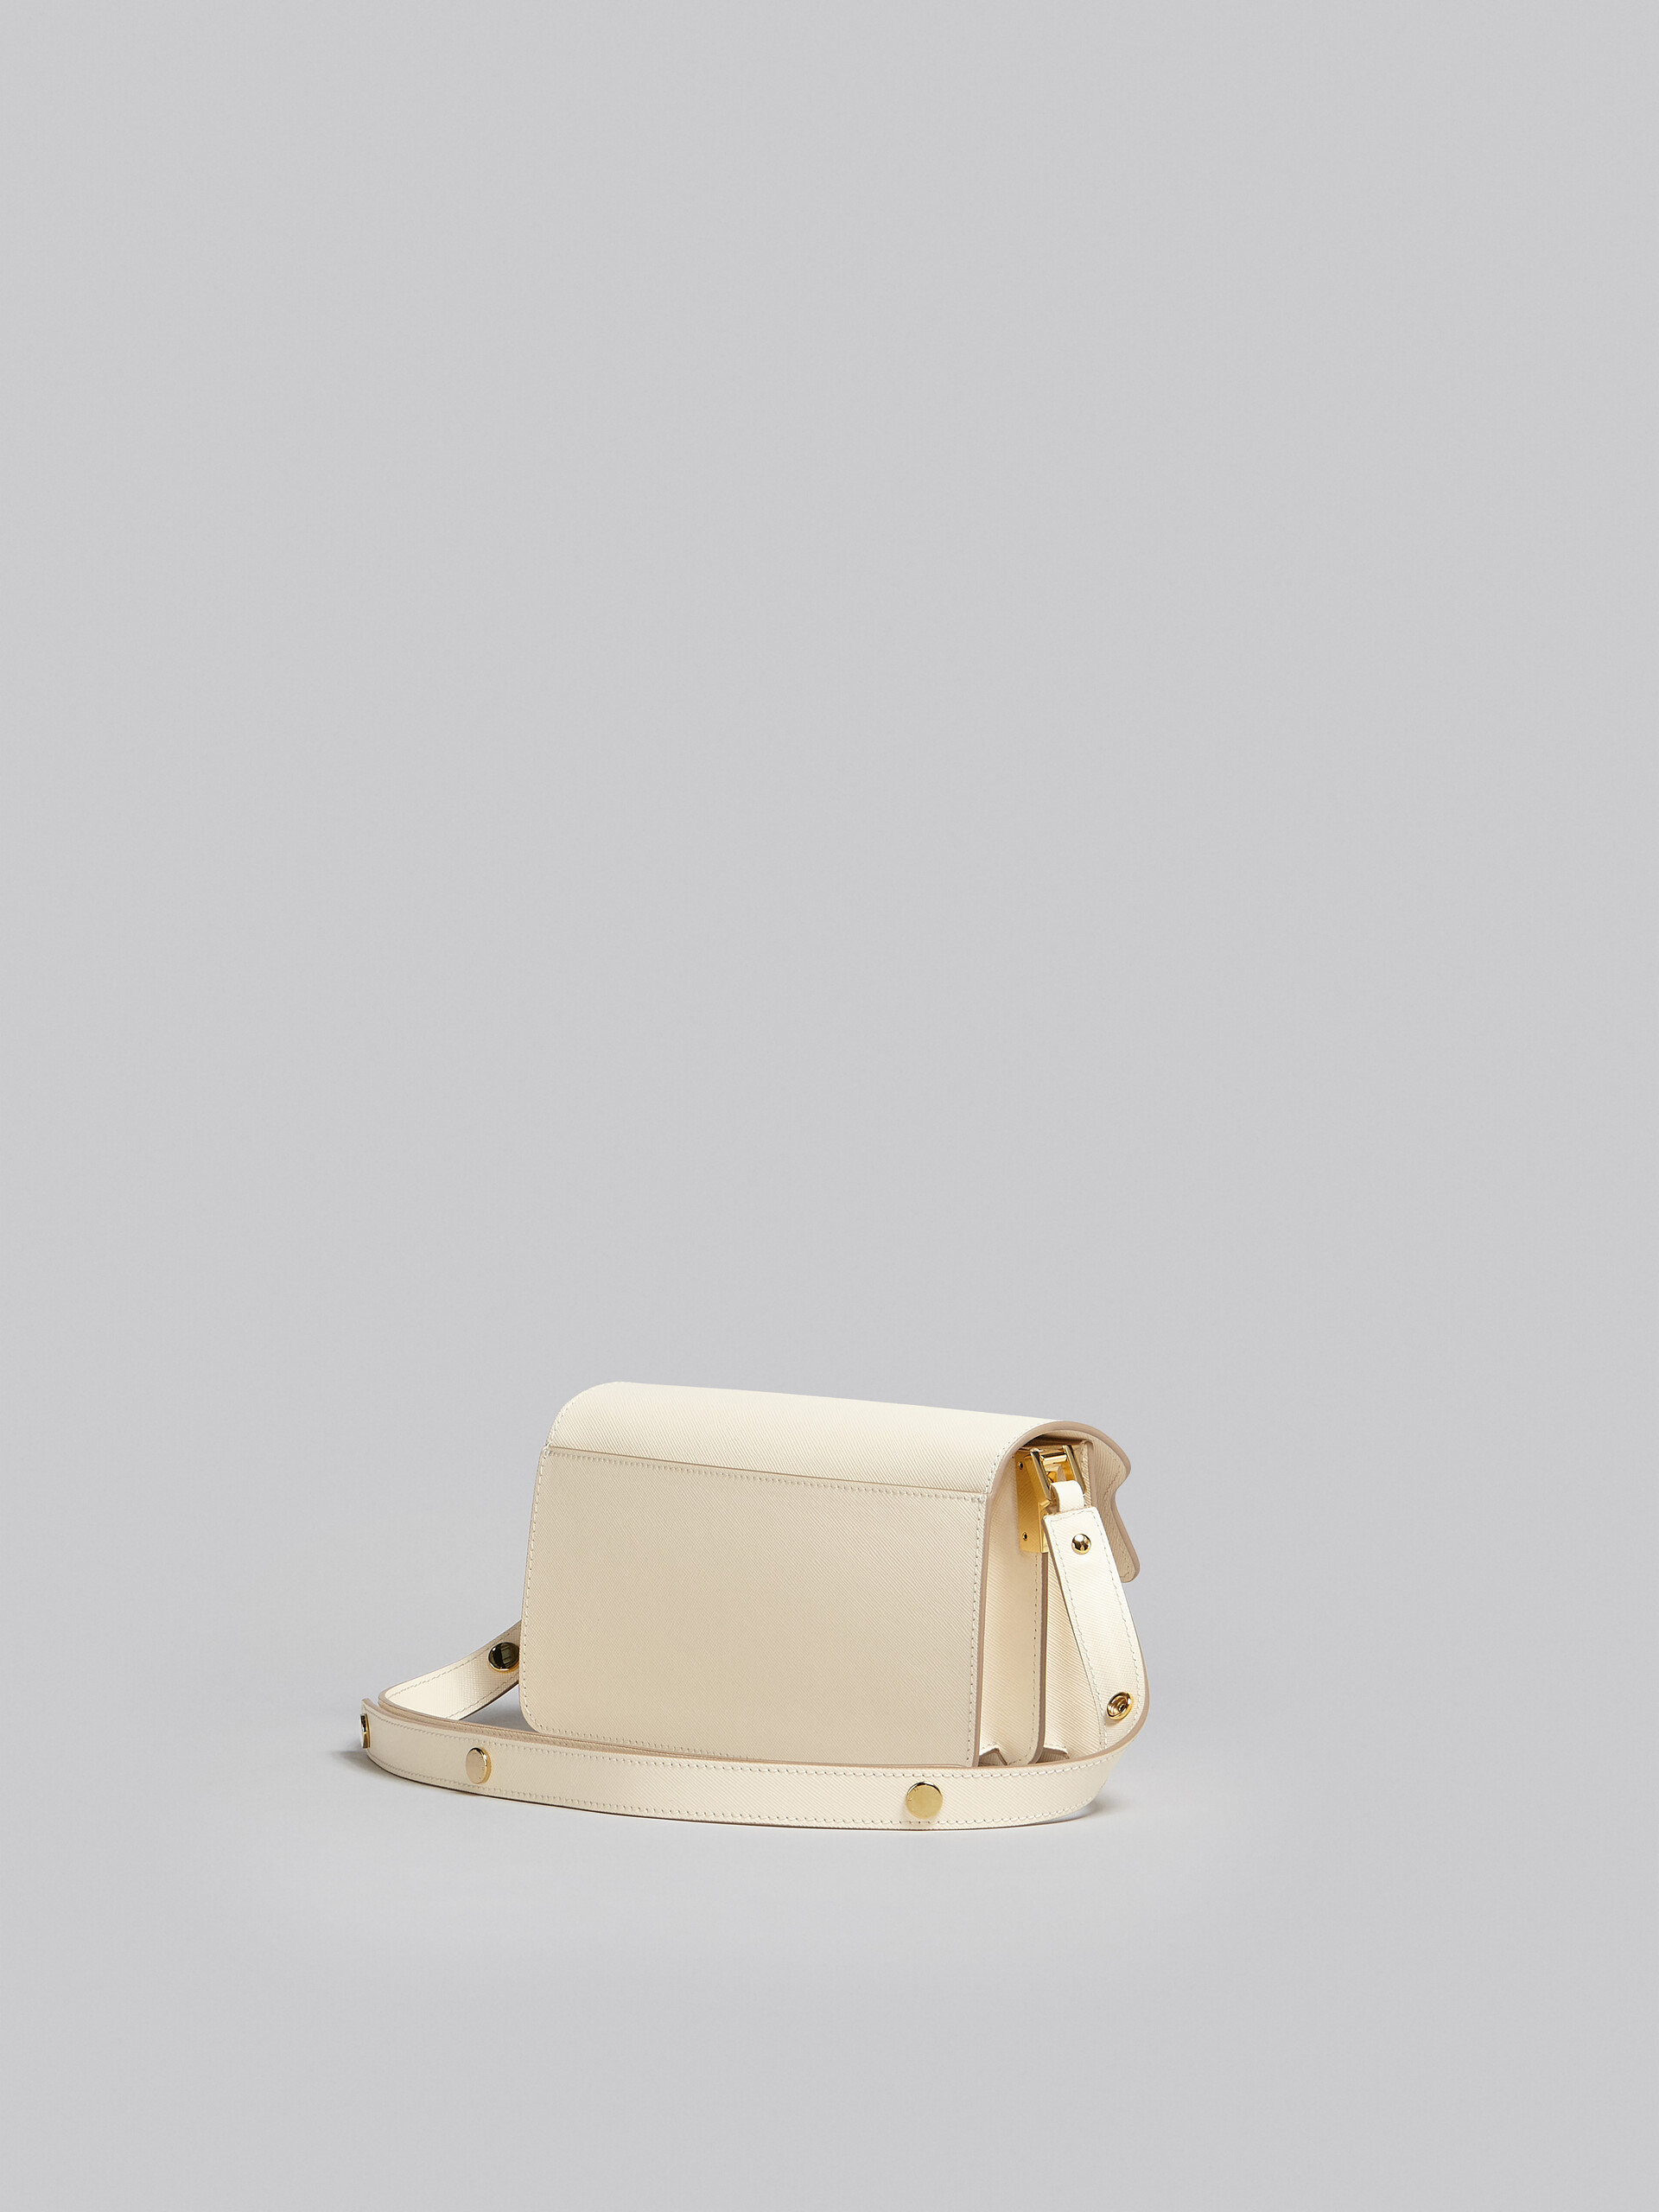 Trunk Bag E/W in white saffiano leather - Shoulder Bag - Image 3